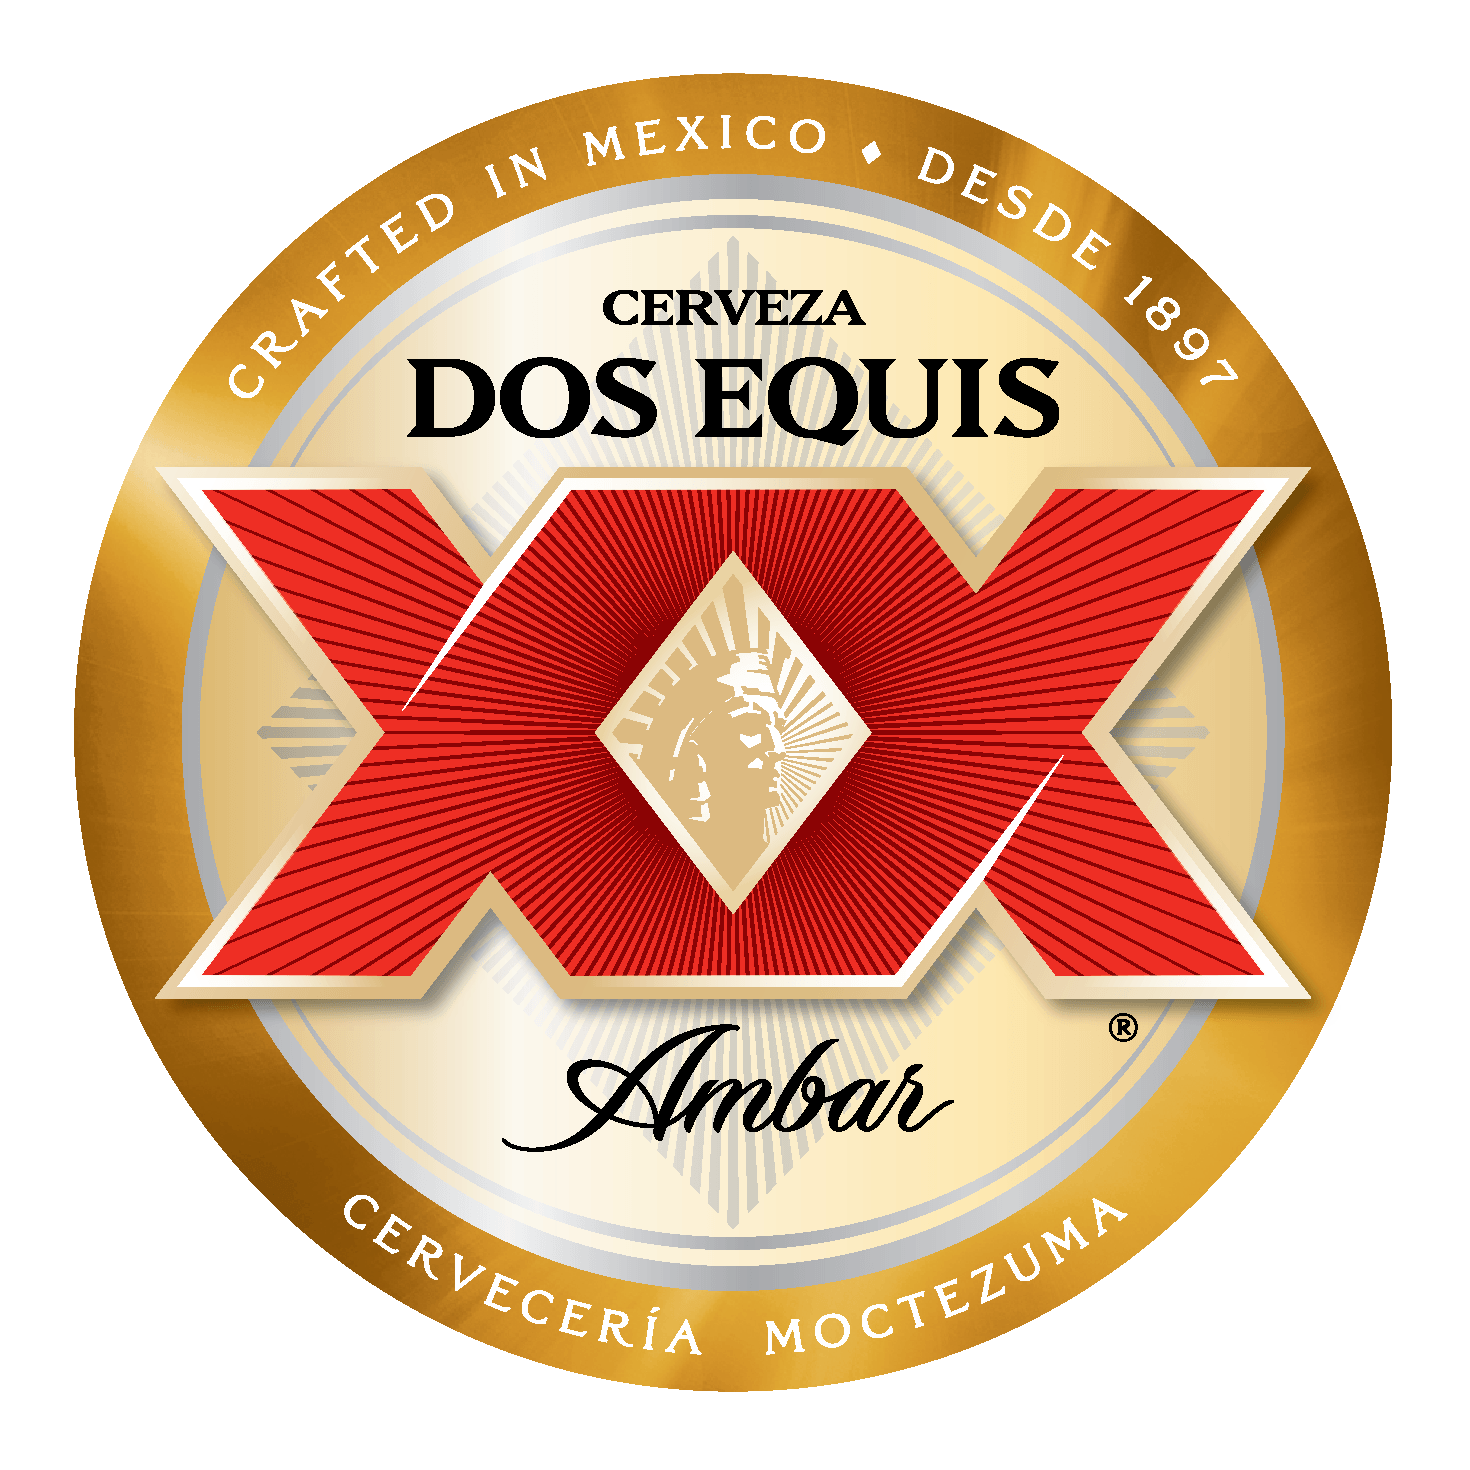 Dos XX Logo - Dos Equis Ambar Beer Menu